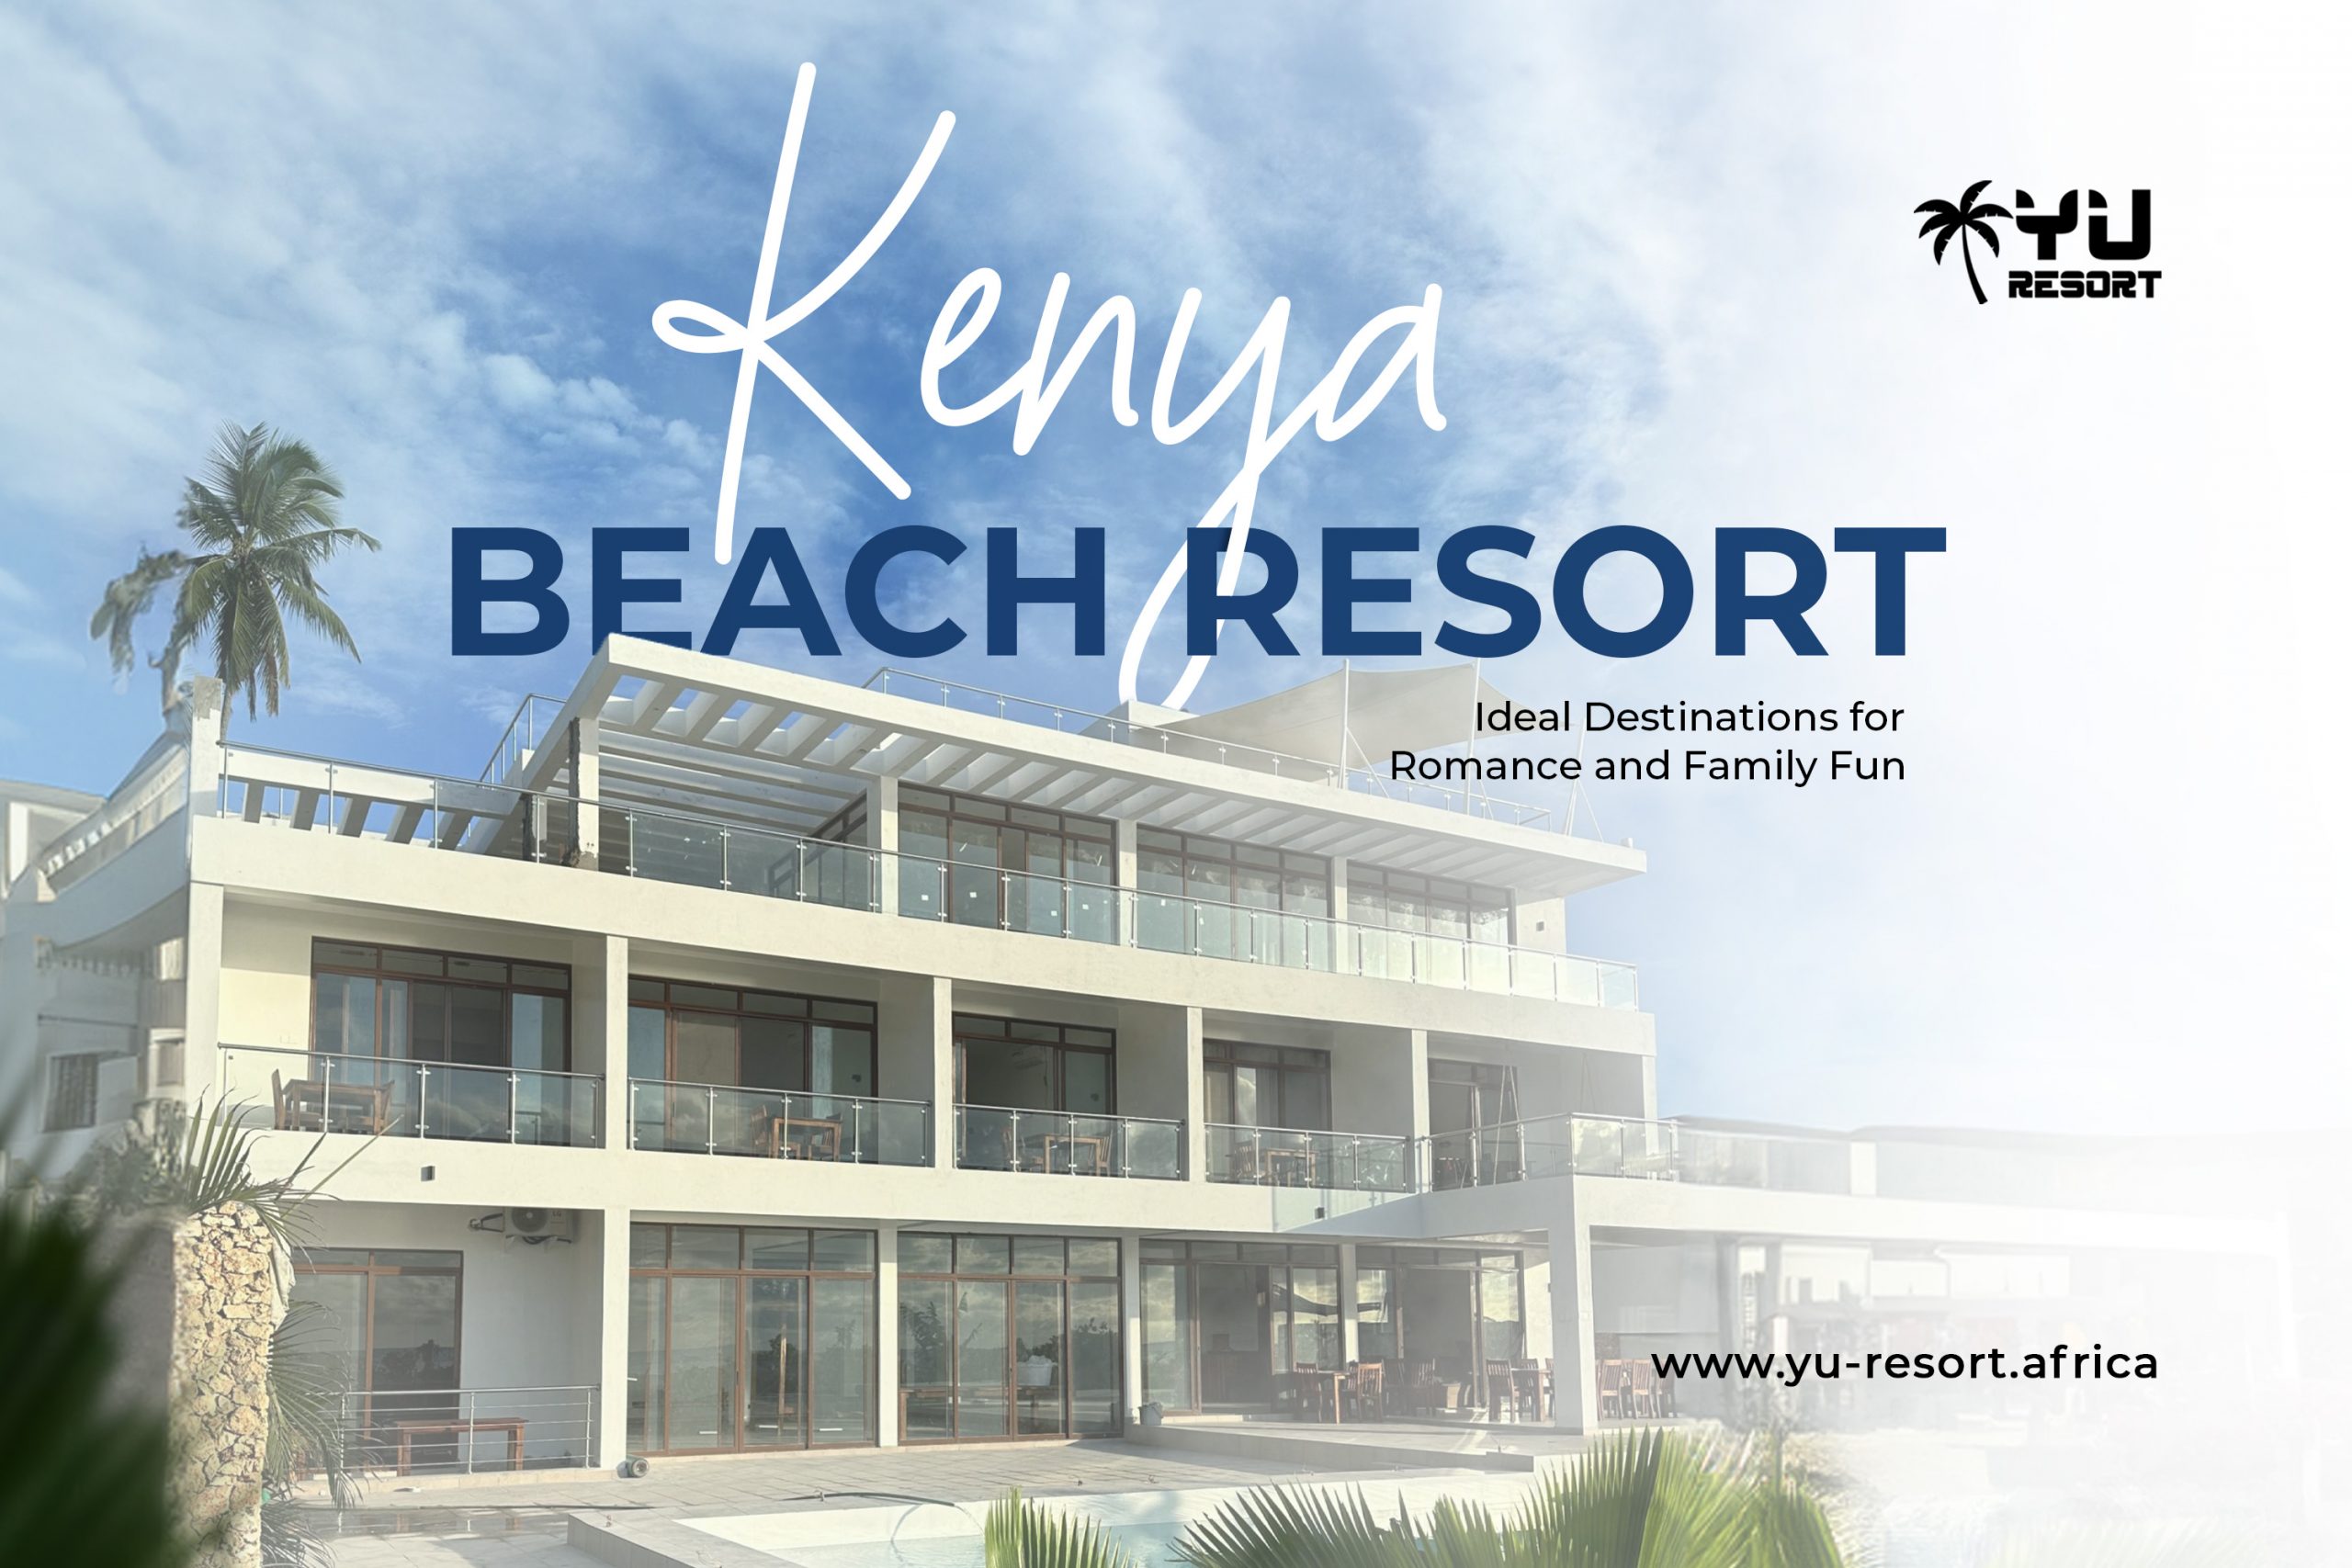 Kenyan Beach Resort: Ideal Destinations for Romance and Family Fun